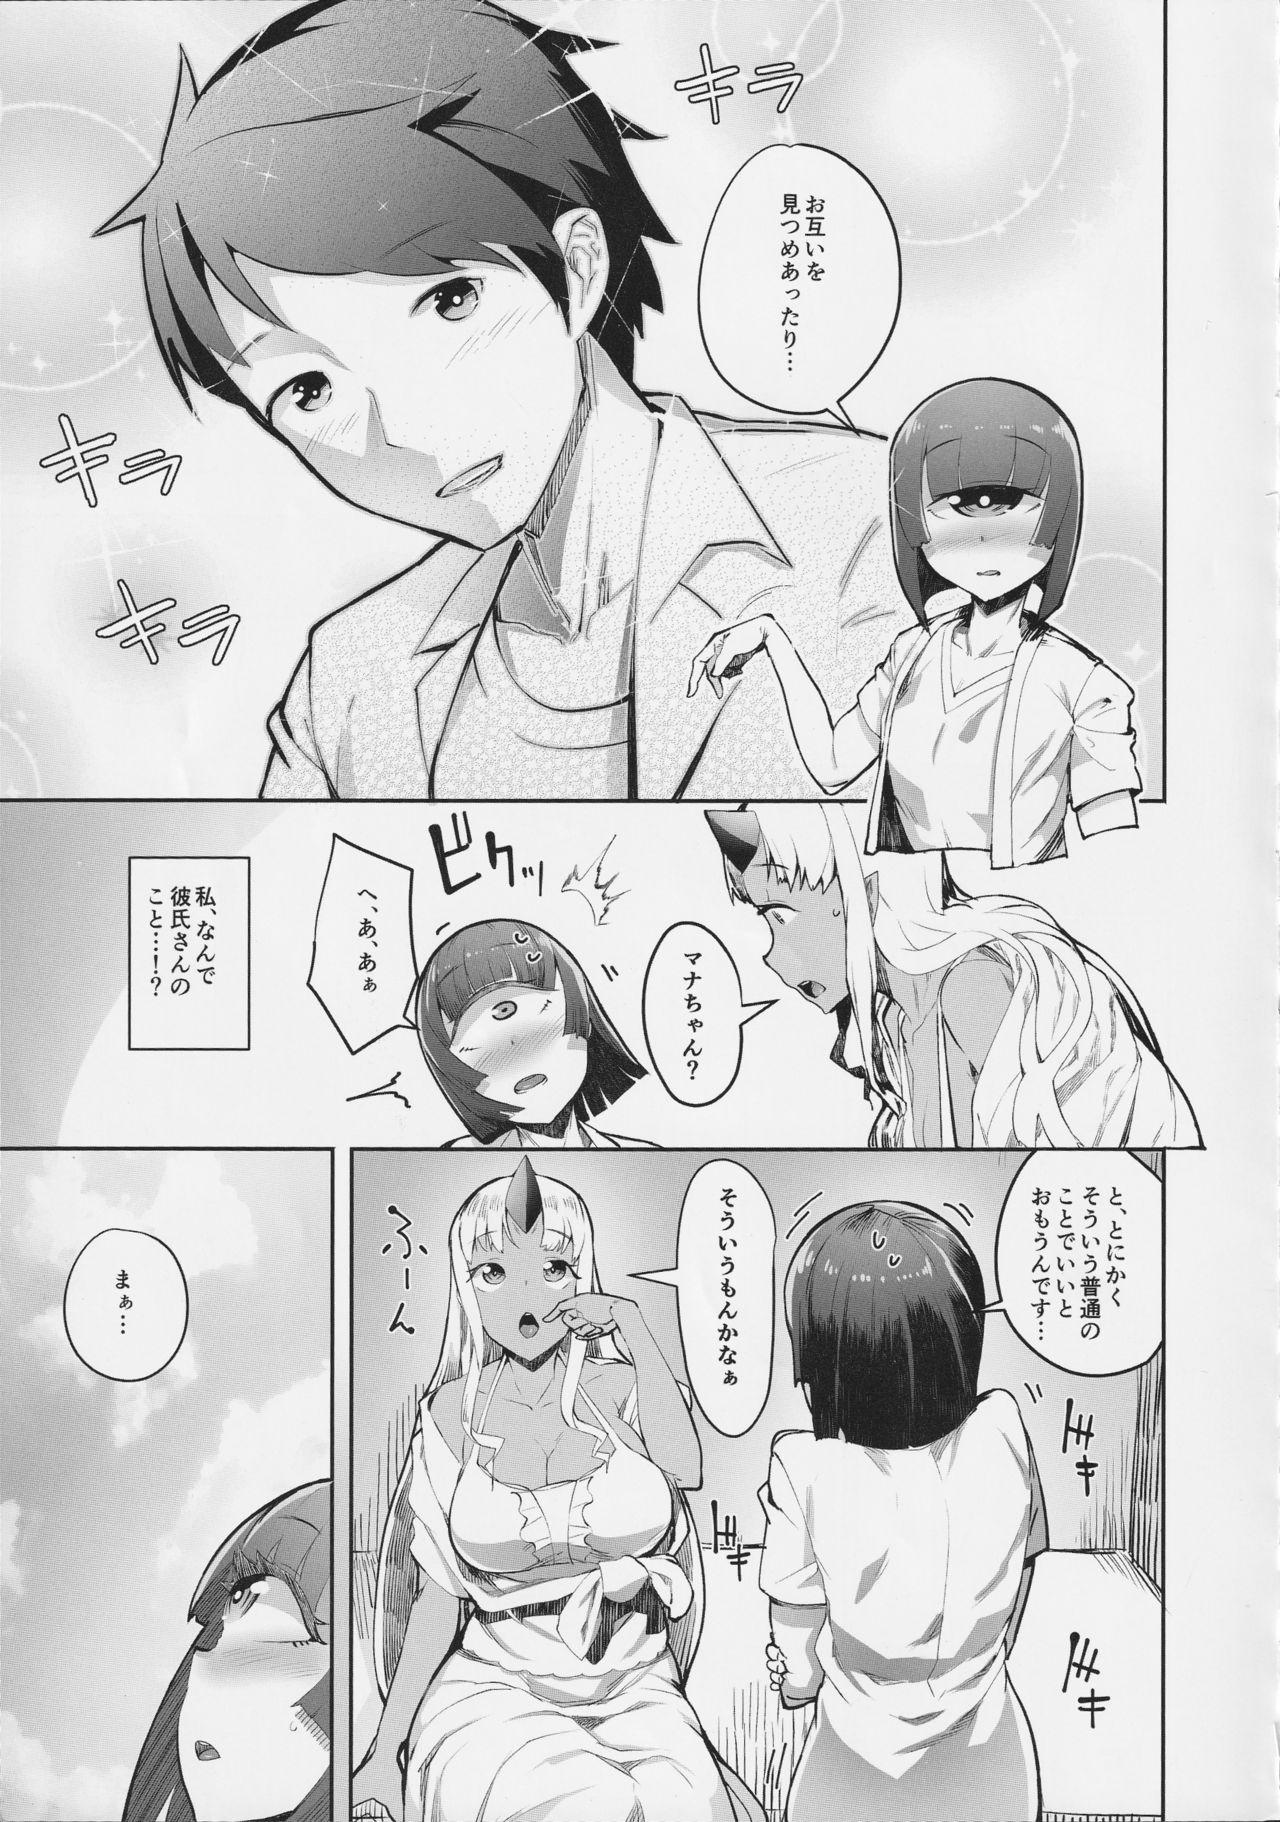 Sub Monster Musume no Iru Nichijou SS ANTHOLOGY - Everyday Life with Monster Girls - Monster musume no iru nichijou Ikillitts - Page 10